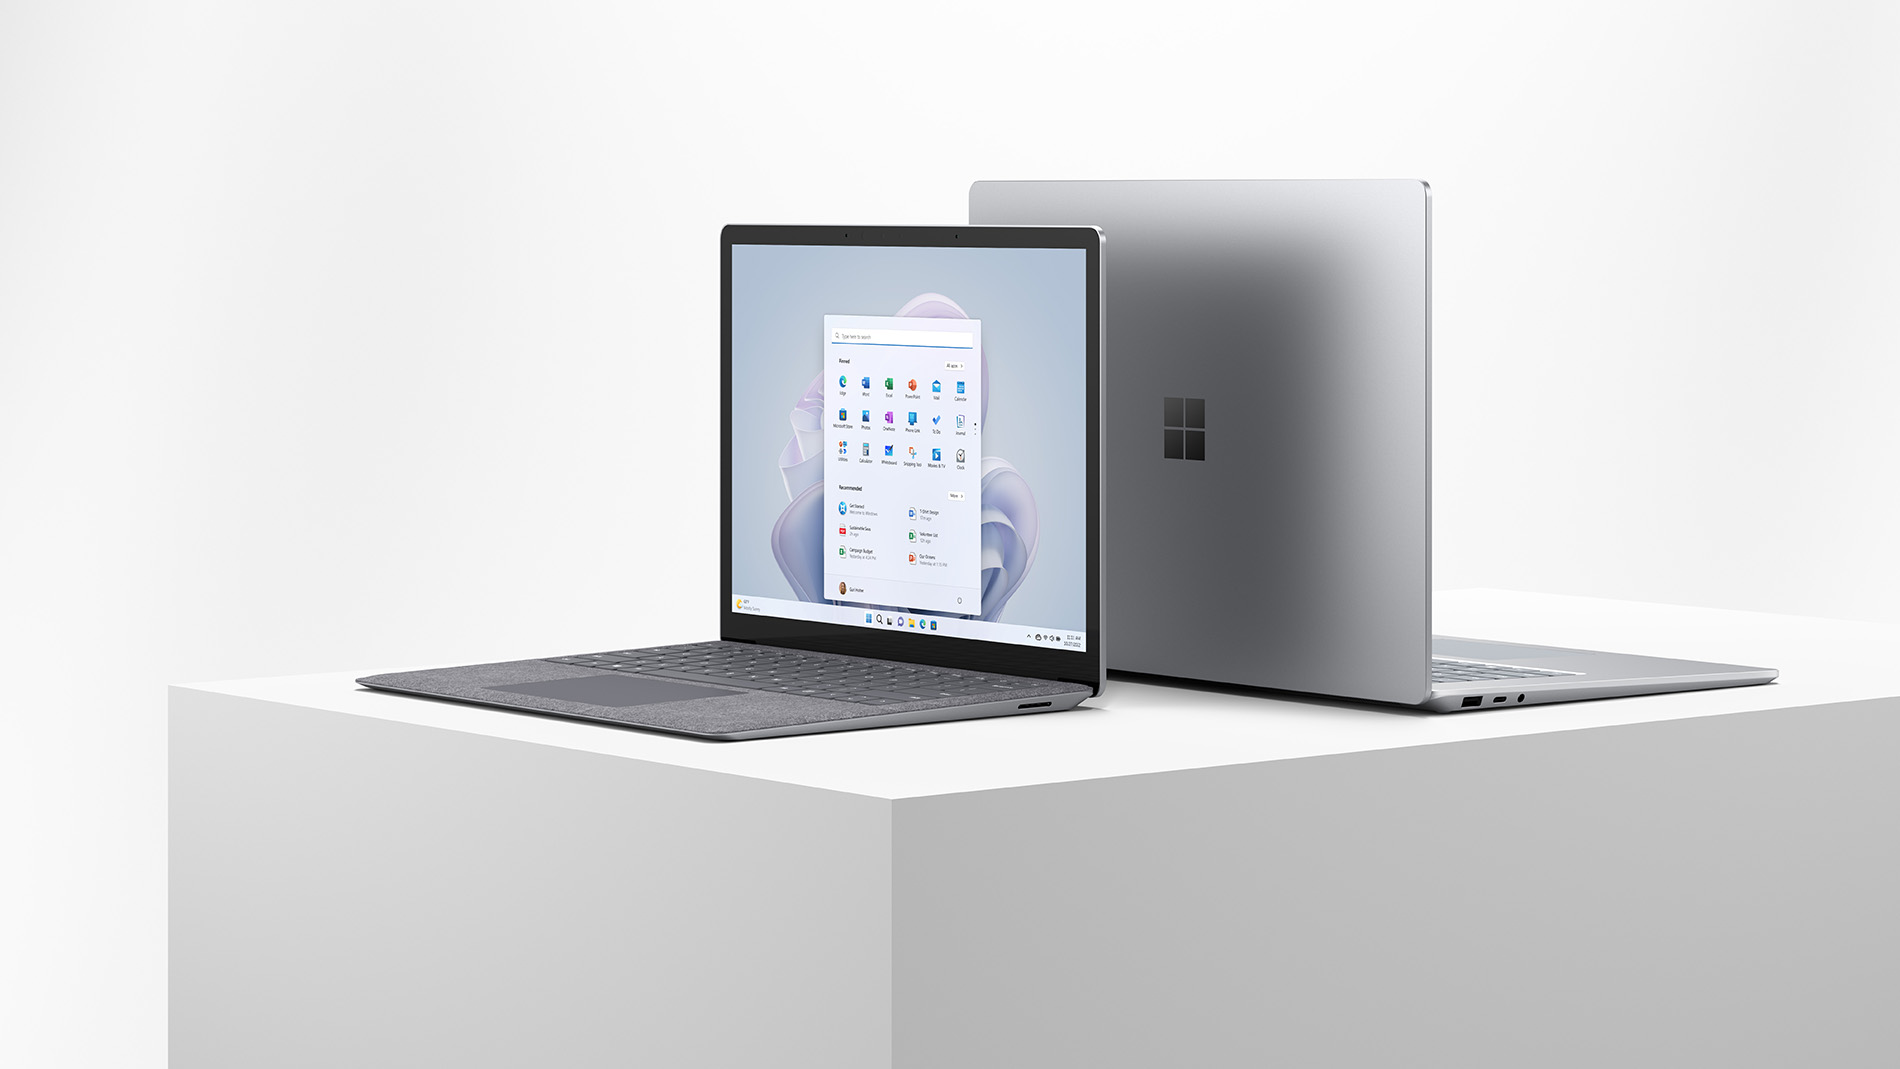 Microsoft Surface Laptop | Core i7 第7世代